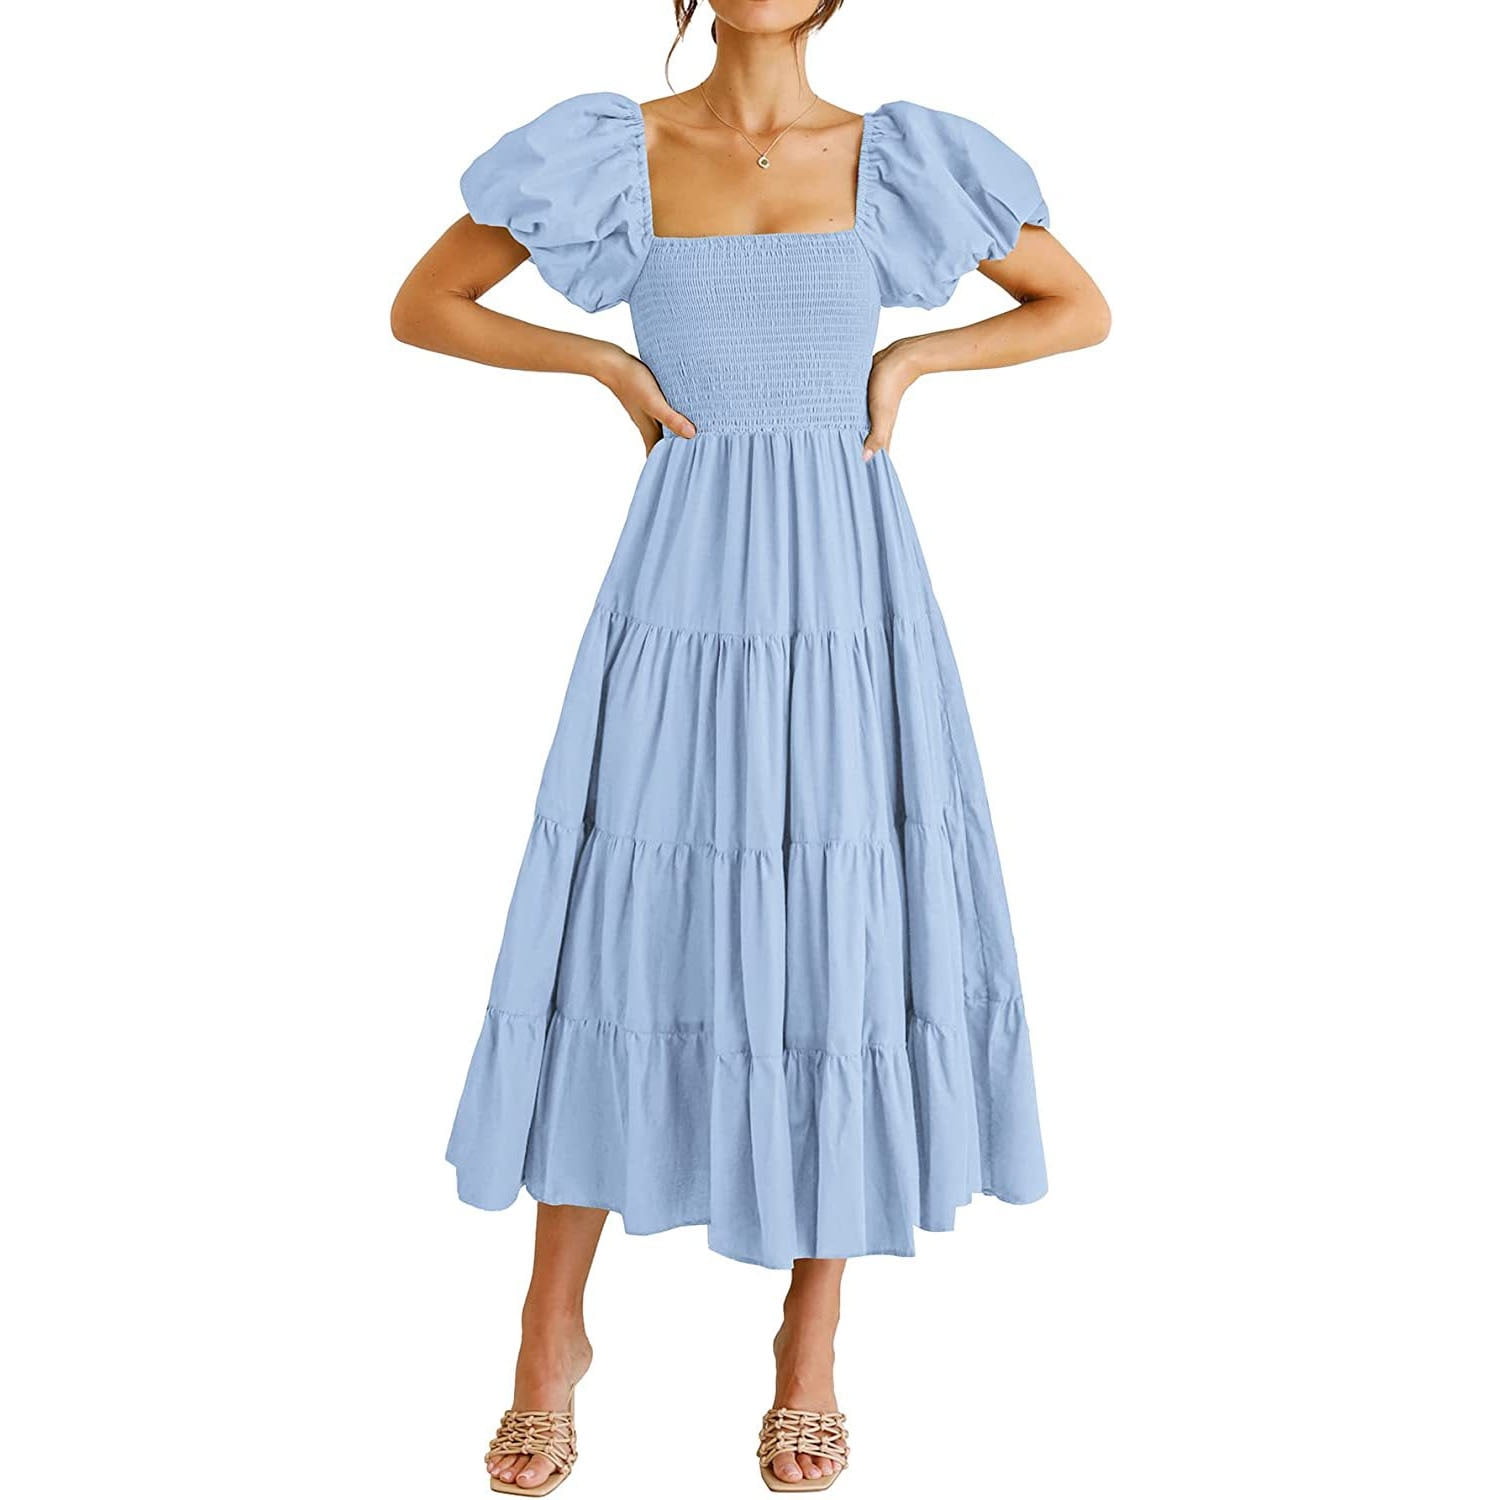 TECREW Womens Square Neck Puff Sleeve Mini Dress Summer Chiffon Swiss Dot  Flowy Smocked Dress, Blue, Small at Amazon Women's Clothing store